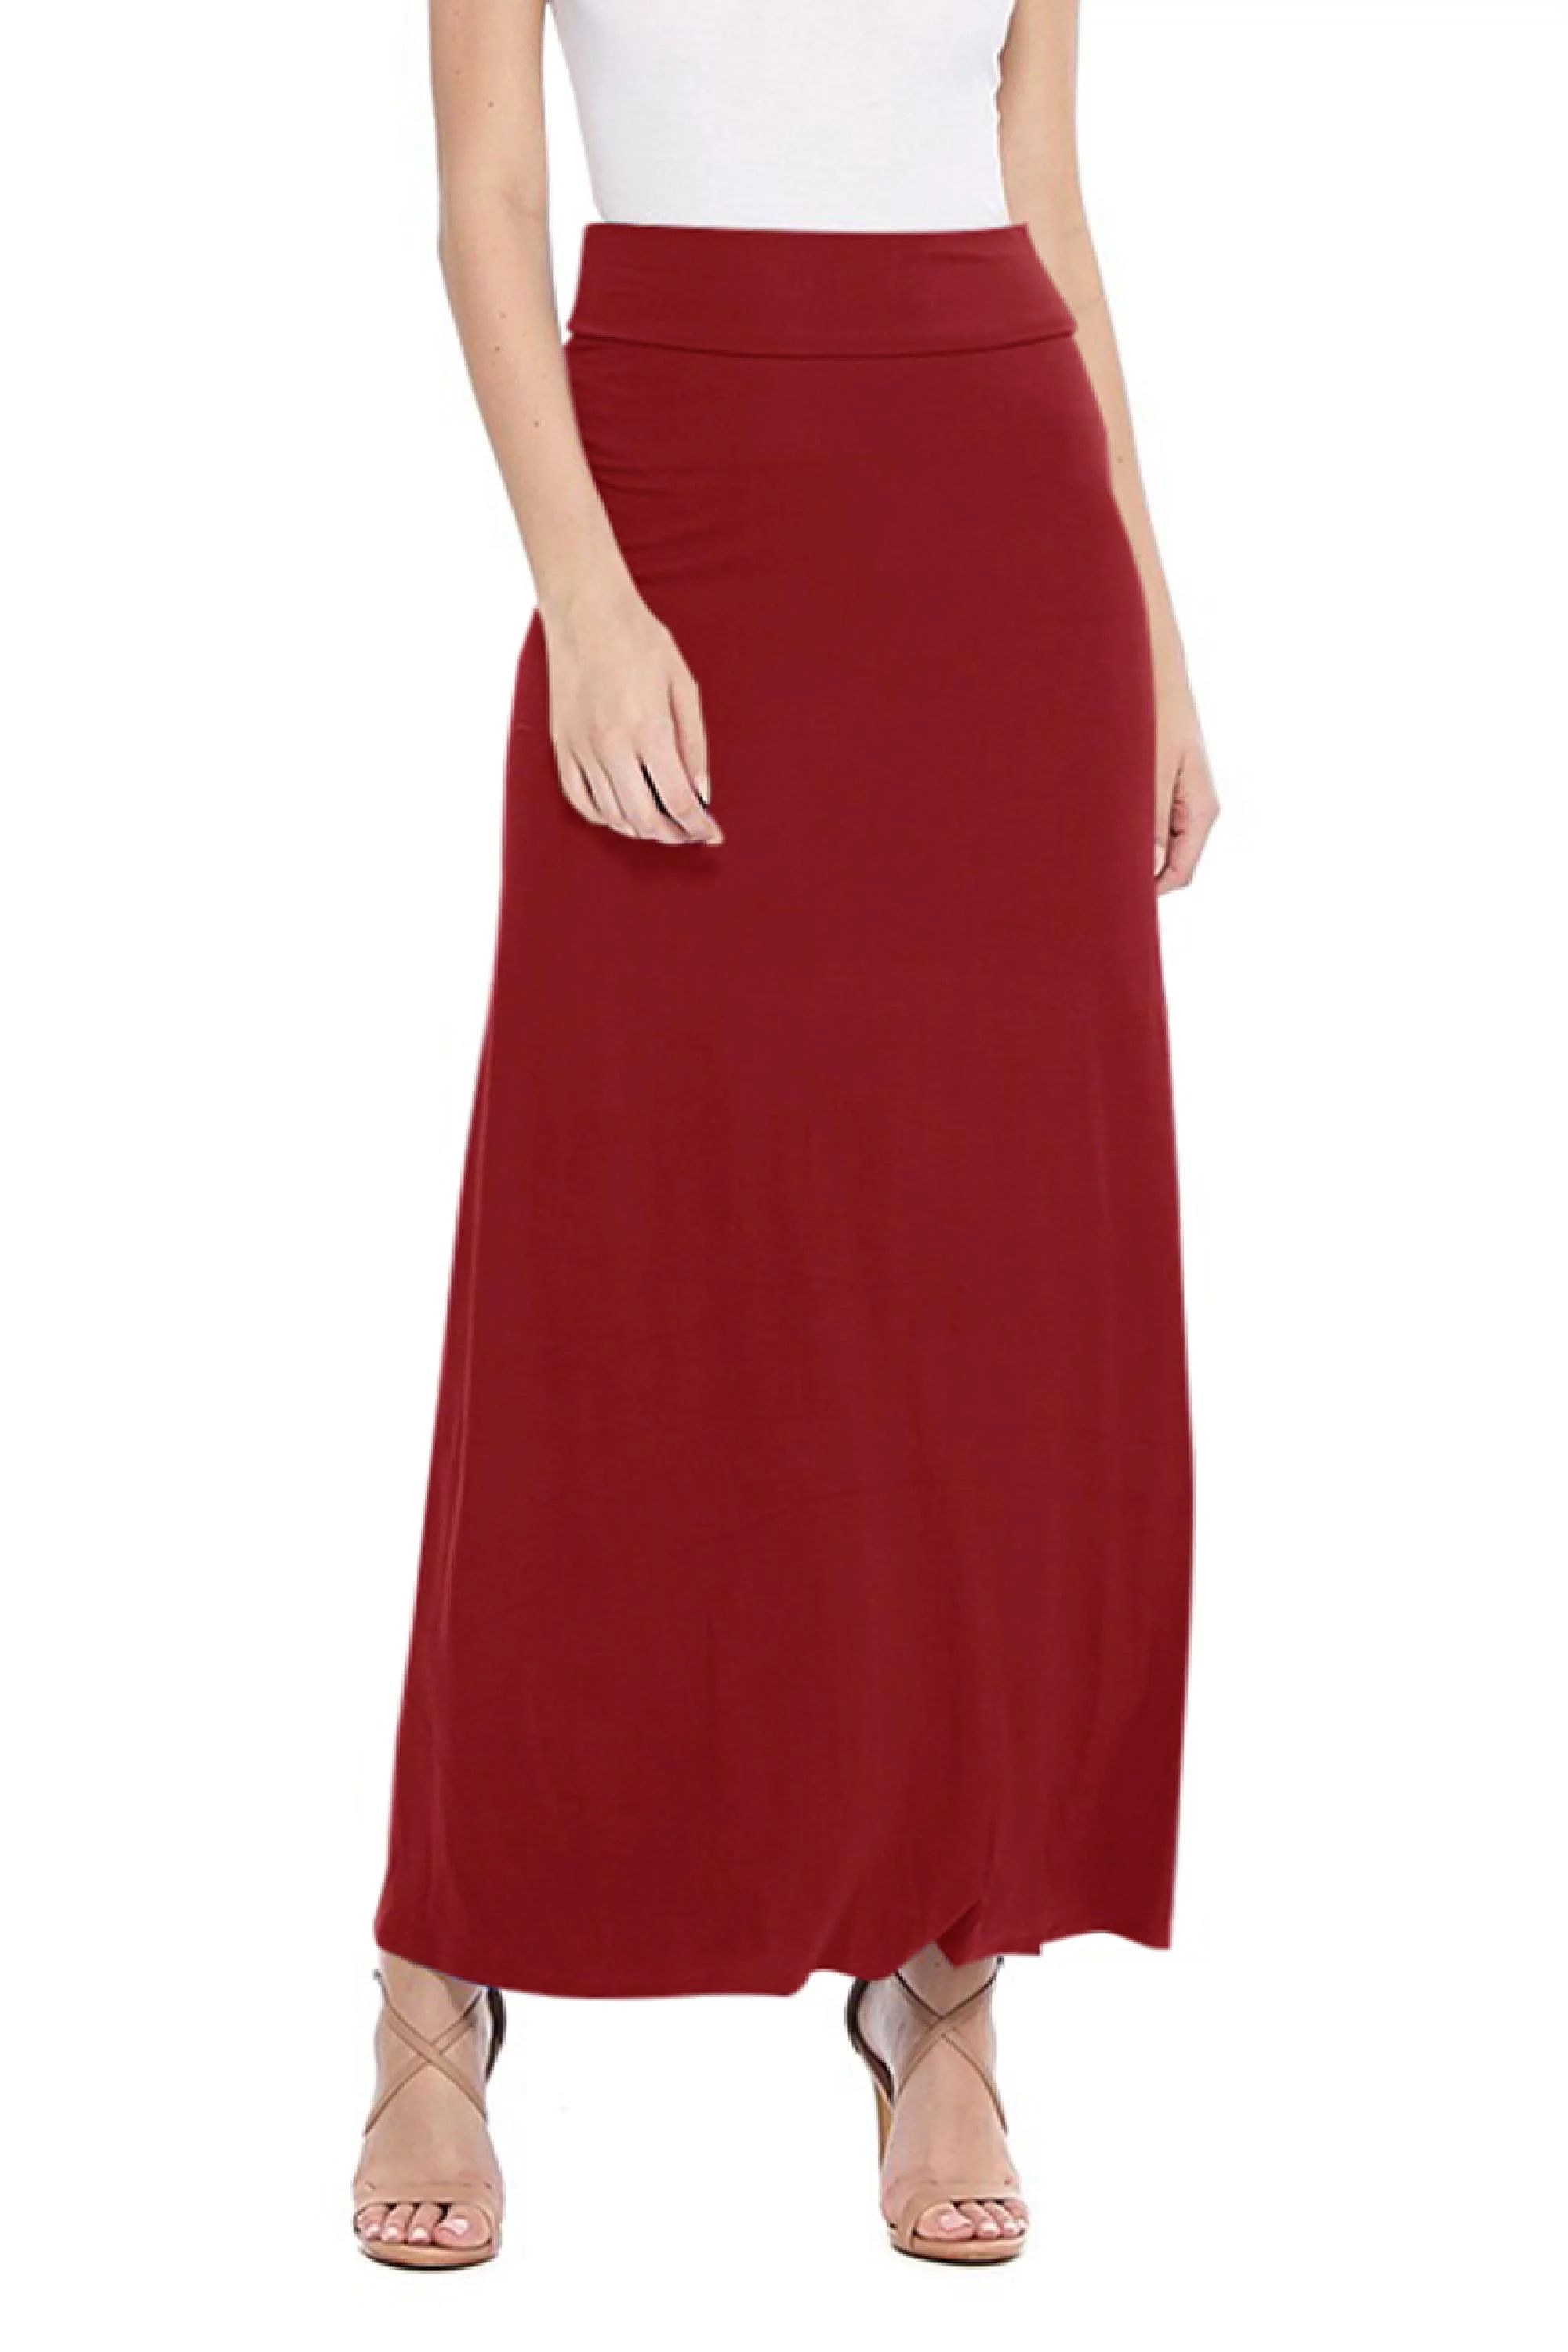 Women's Basic Casual High Waist Foldable Waistband Solid Maxi Skirt S-3XL | Walmart (US)